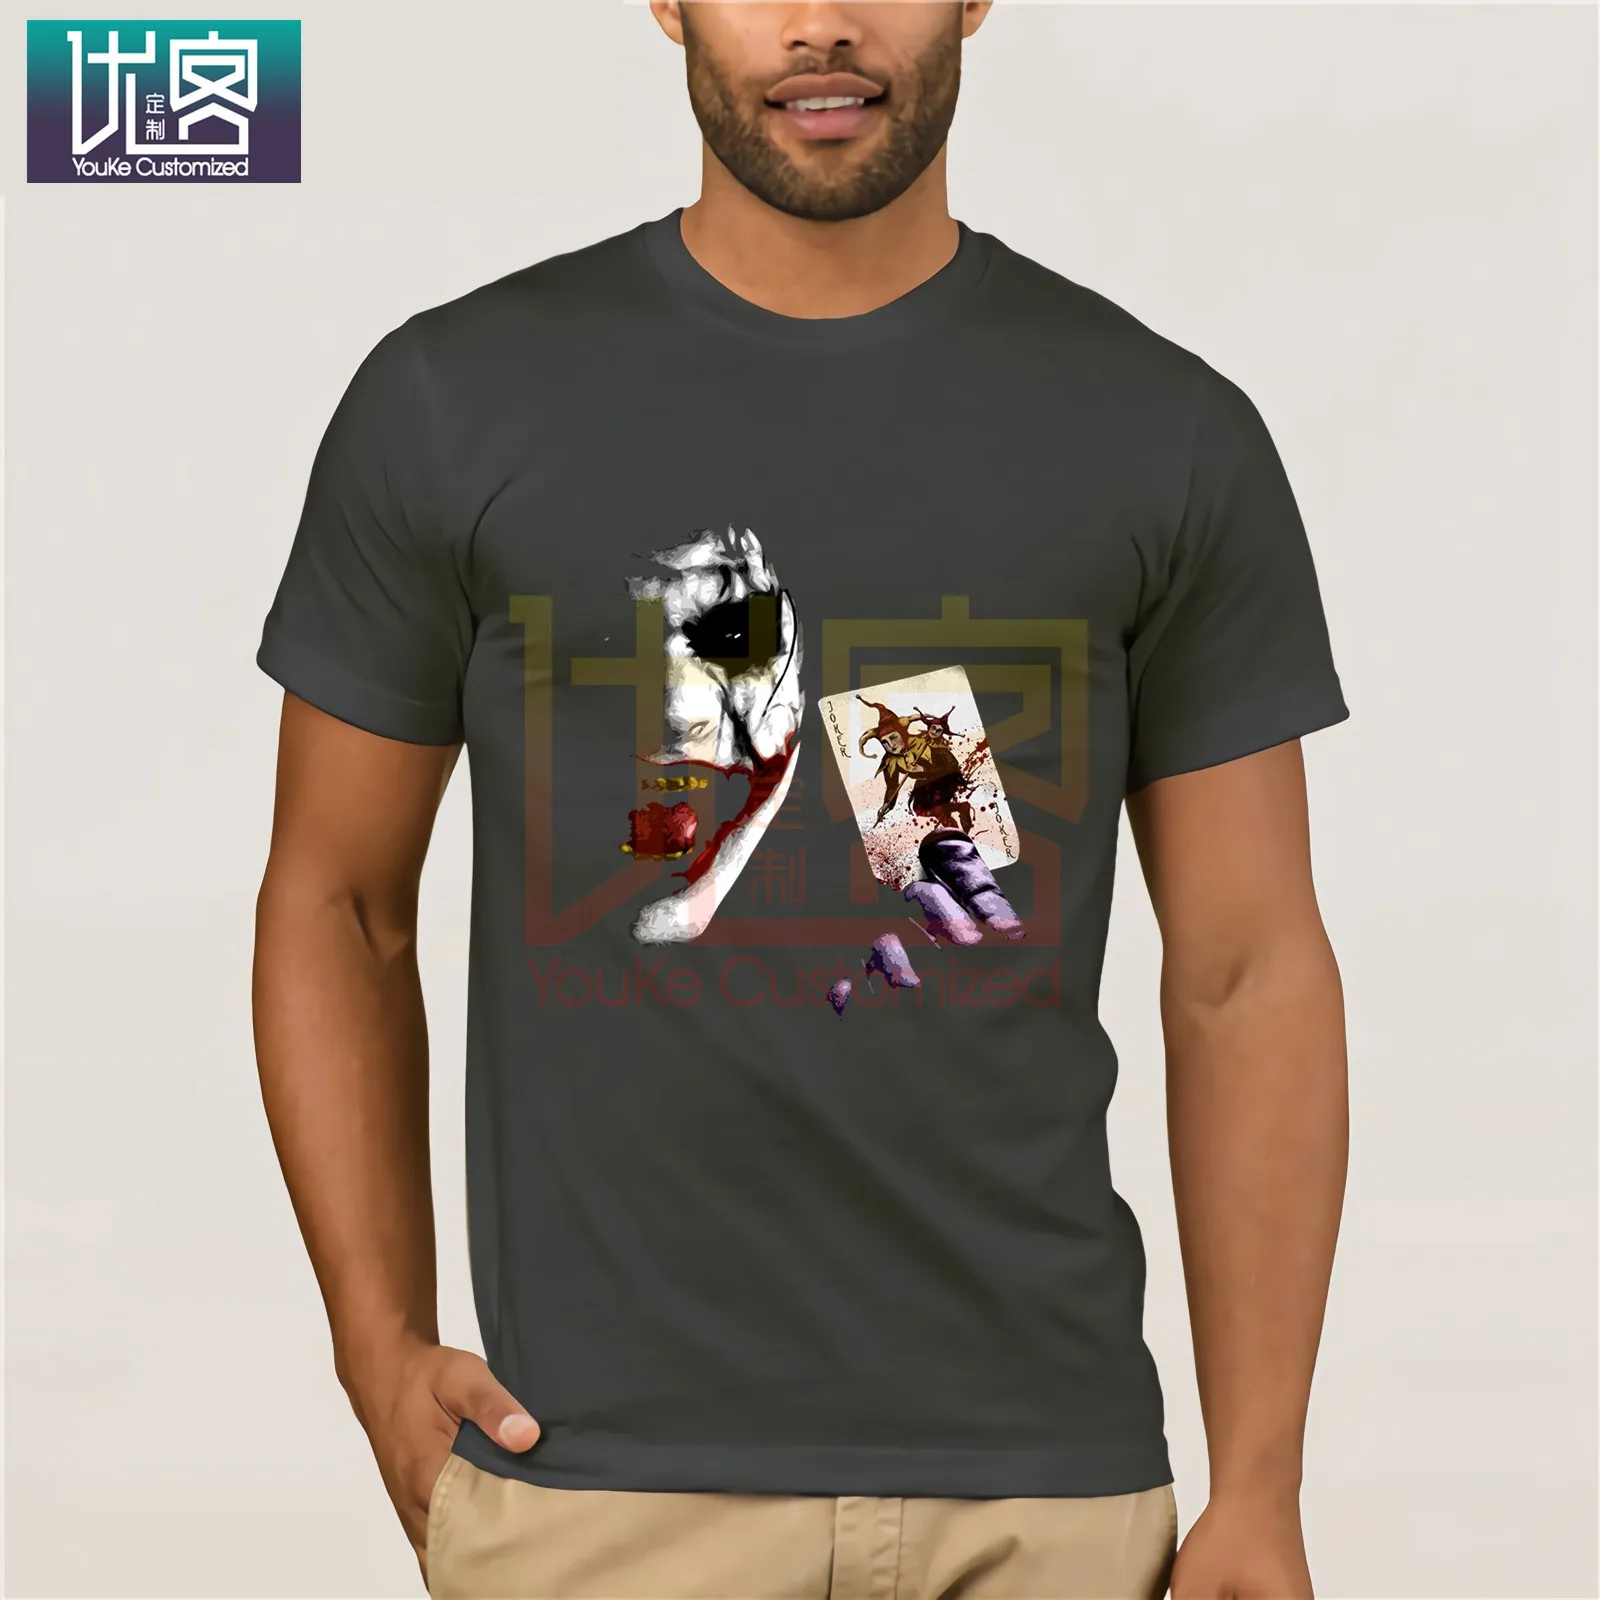 Крутая футболка Joker Heath Ledger винтажная с Бэтменом 2 лето 2019 новая мода 100% хлопок